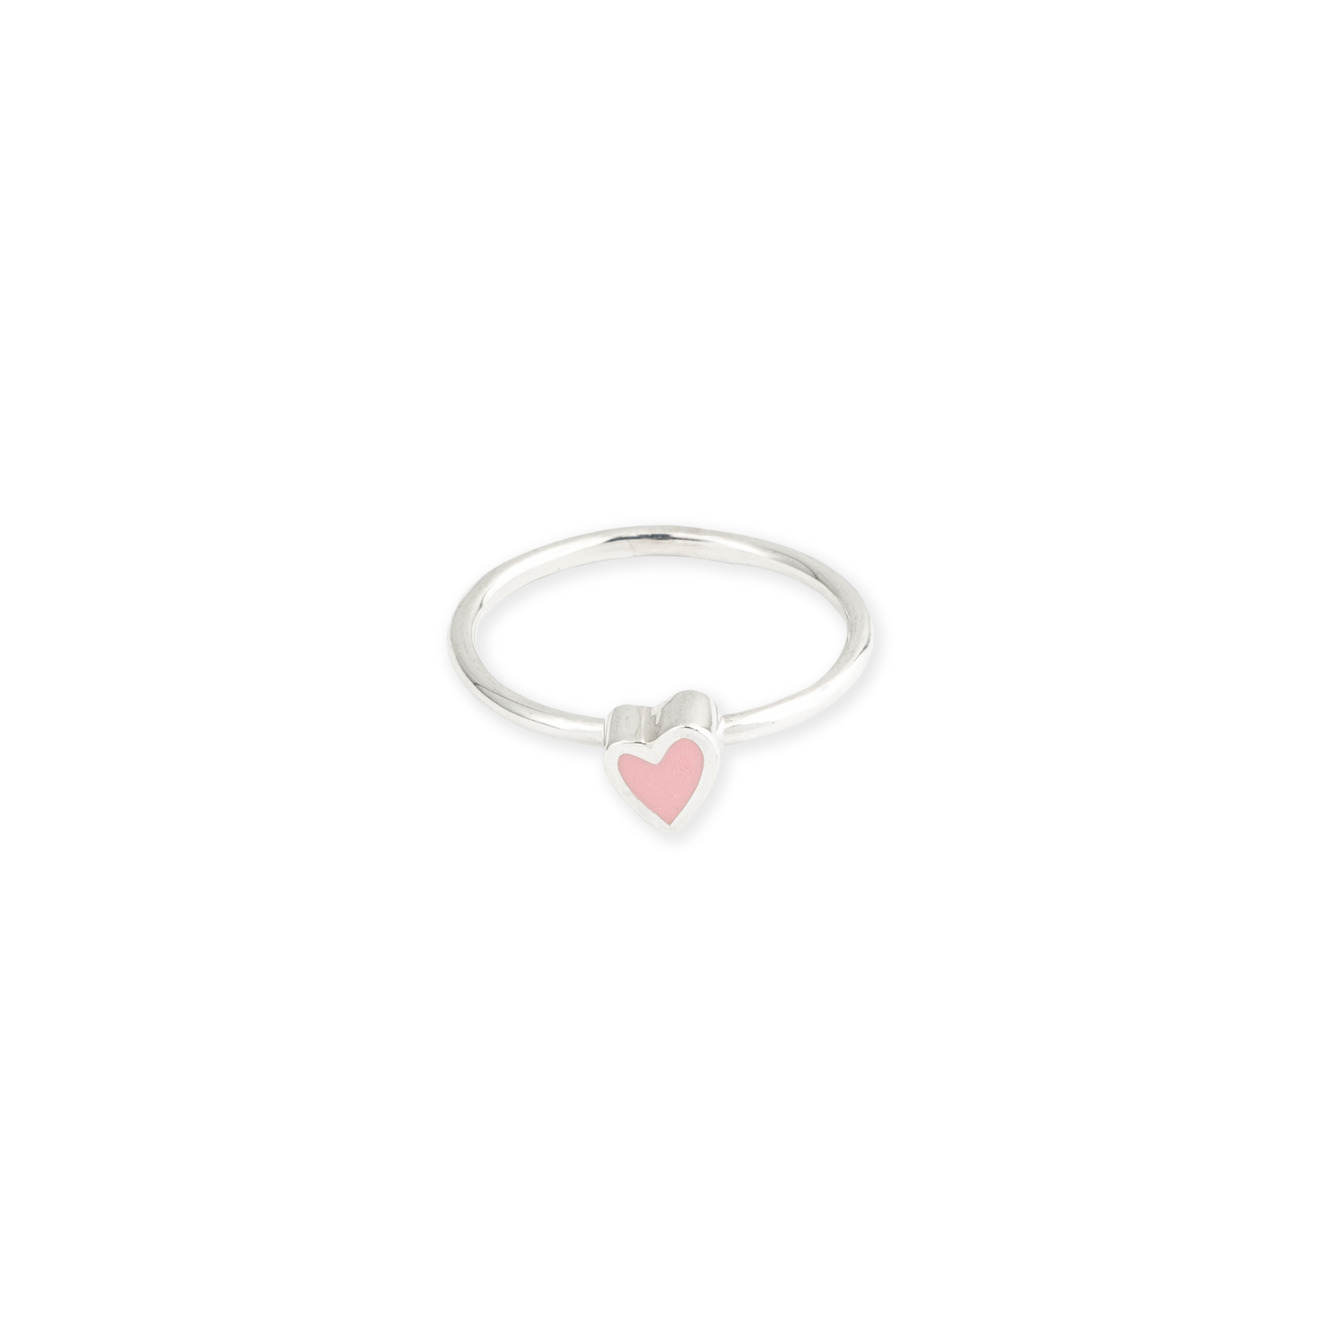 ура jewelry кольцо из серебра с позолоченными шариками на цепочке УРА jewelry Кольцо из серебра с розовым сердцем эмаль